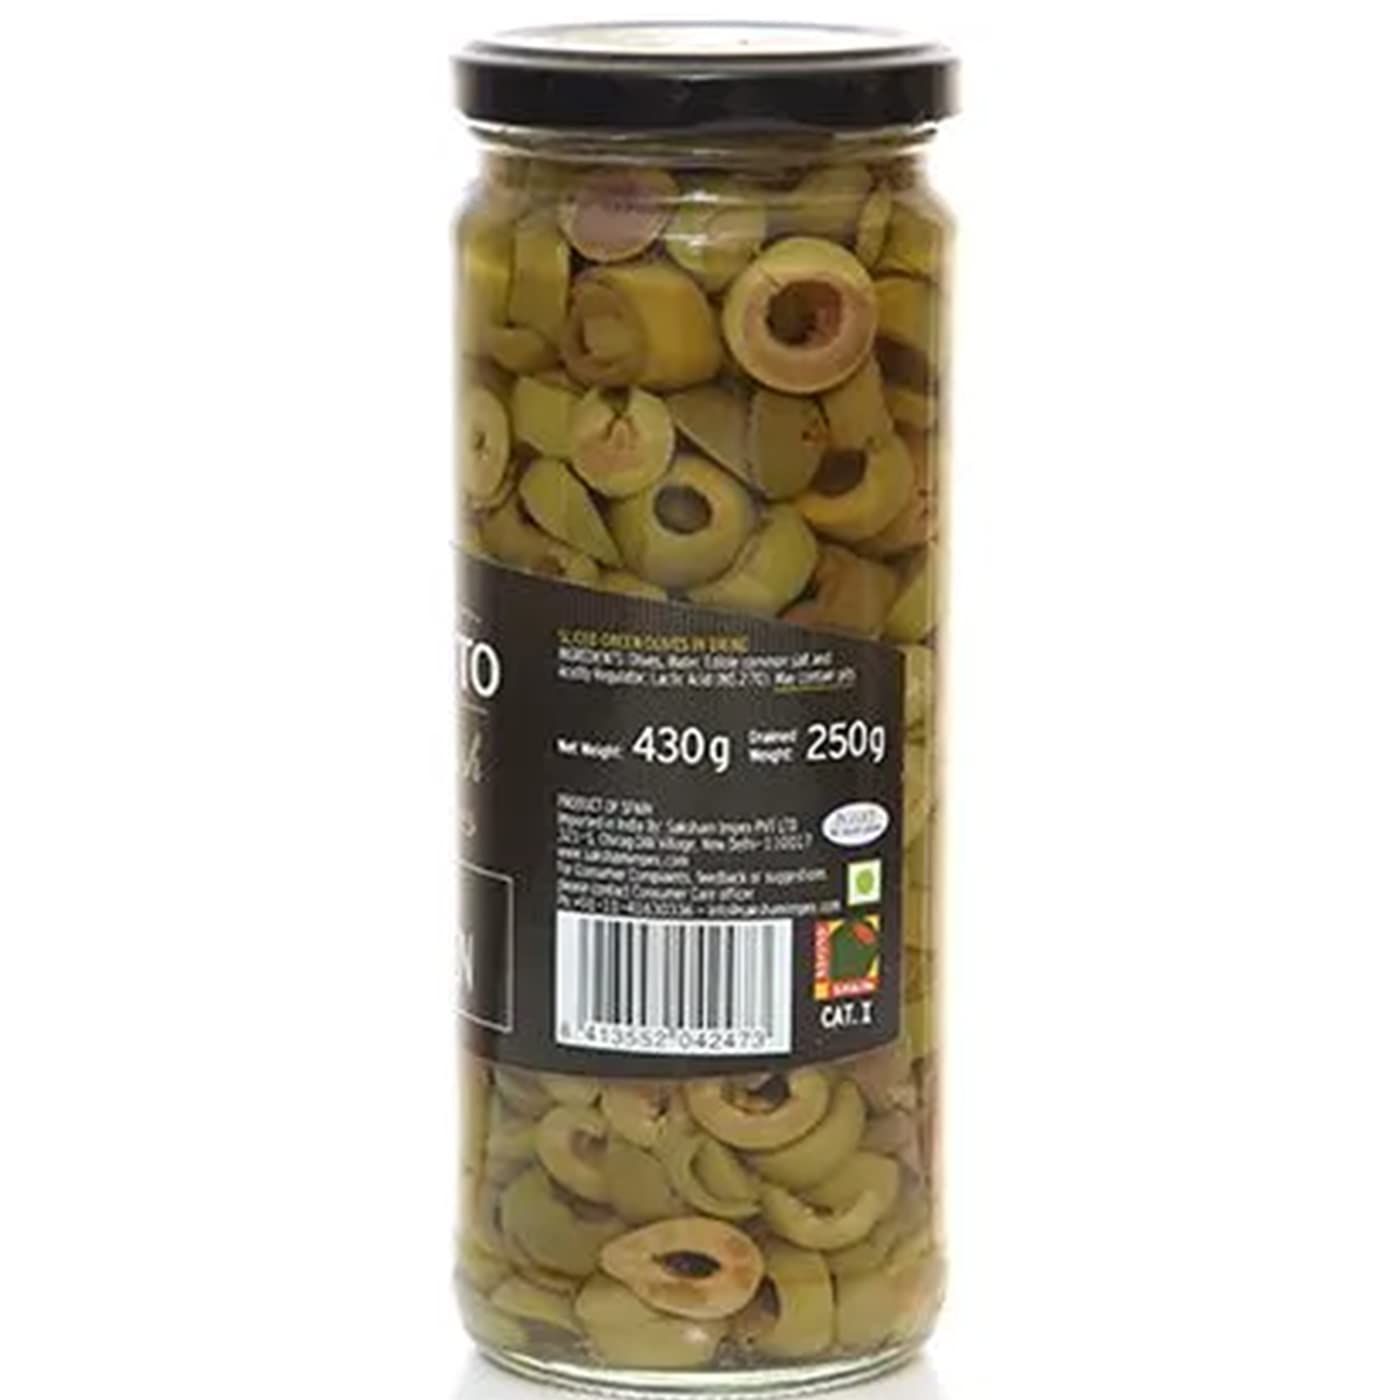 Loreto Sliced Green Olives Image